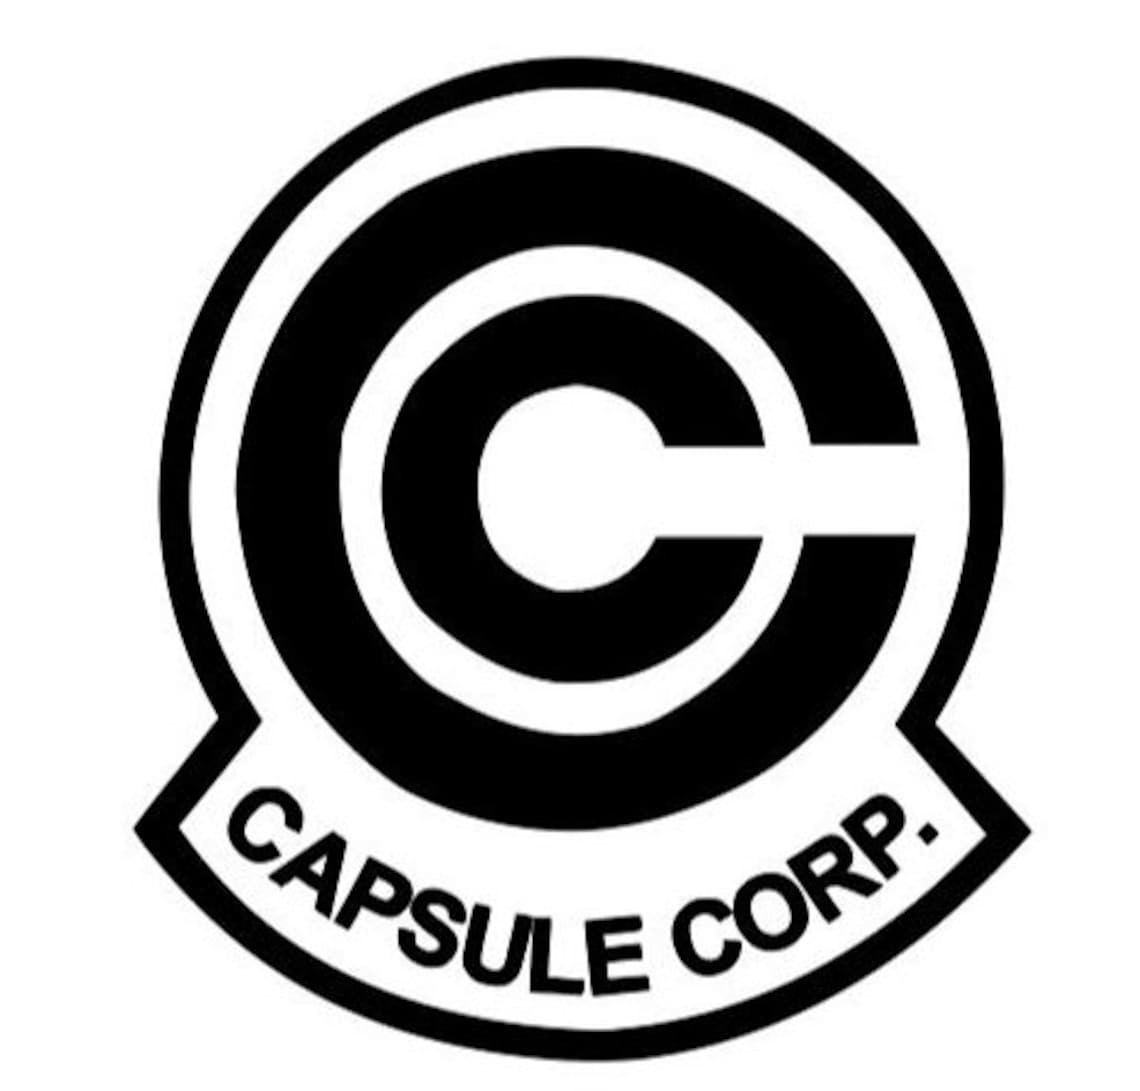 Capsule Corp. Vinyl Decal | Etsy